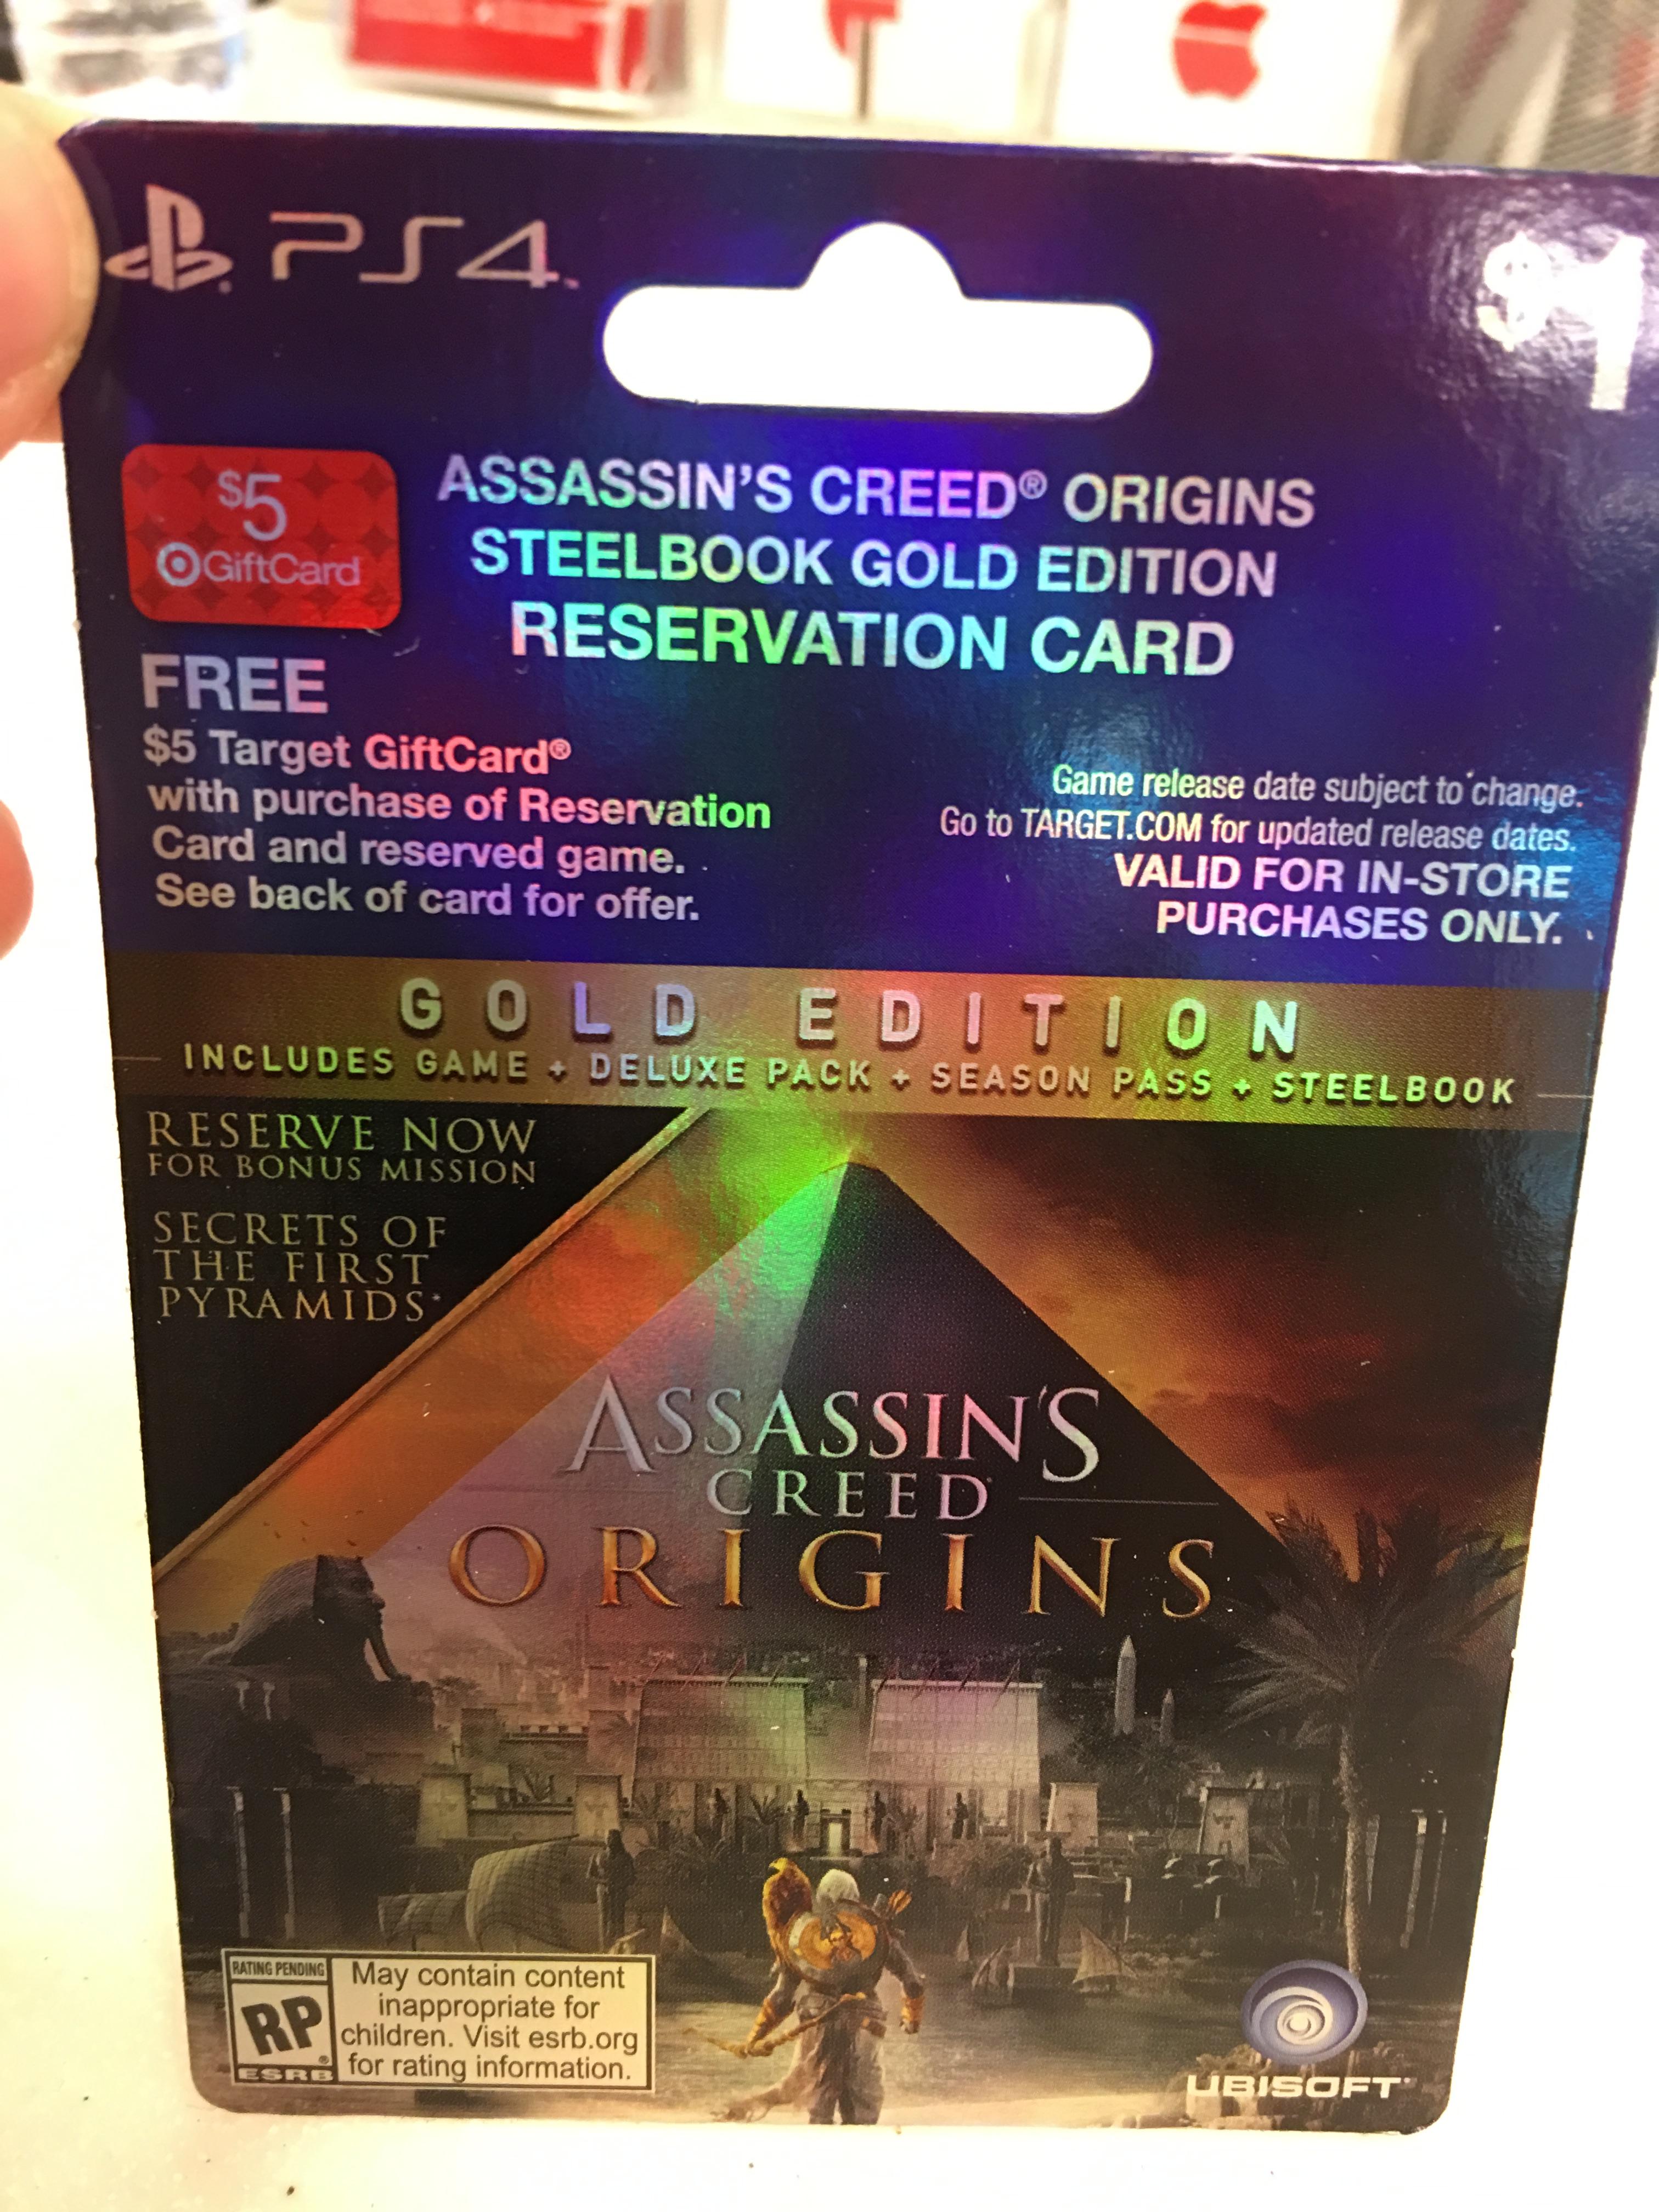 [Rumor] Assassin’s Creed Origins pre-order card spotted at Target